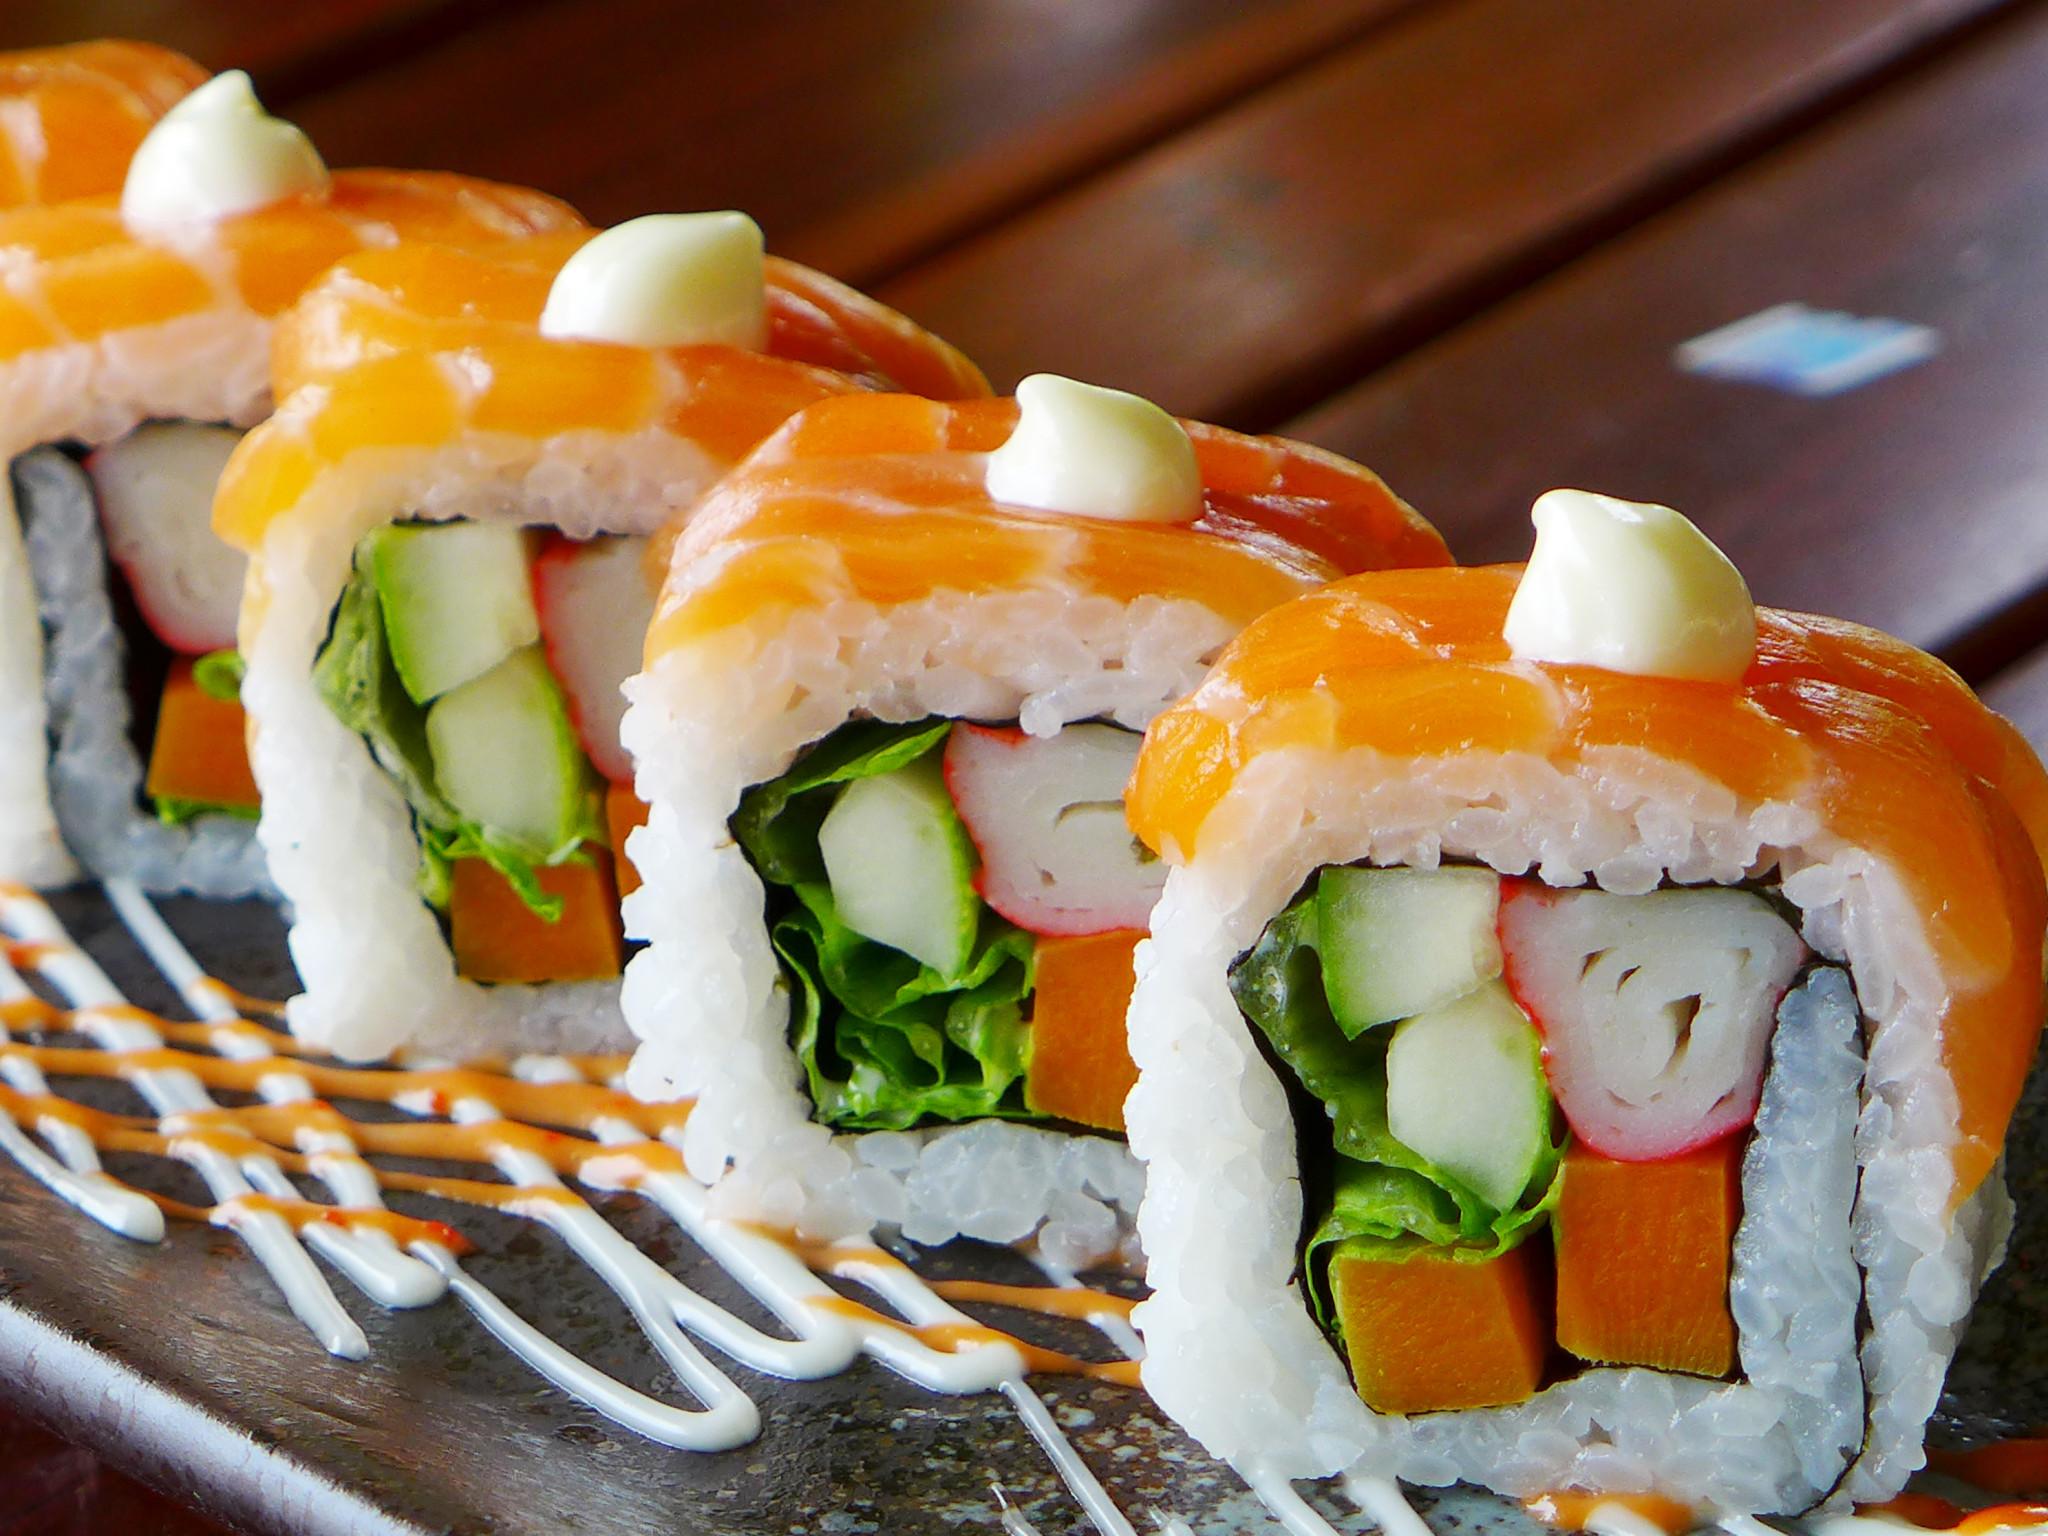 thanh-cua-topping-sushi-6-1655086830.jpg